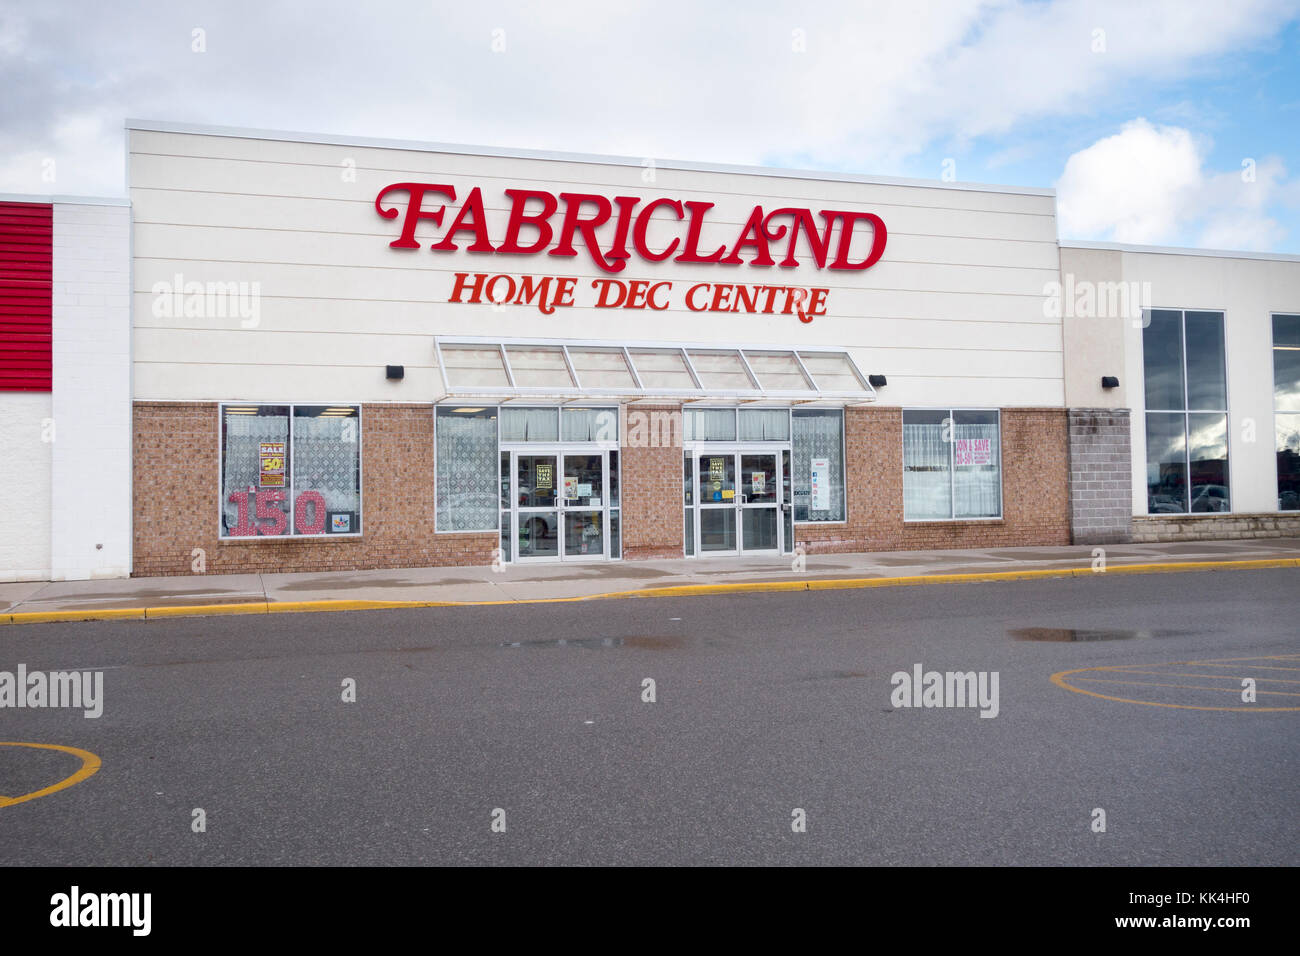 Fabricland fabric store Home Dec Centre in Peterborough Ontario Canada Stock Photo